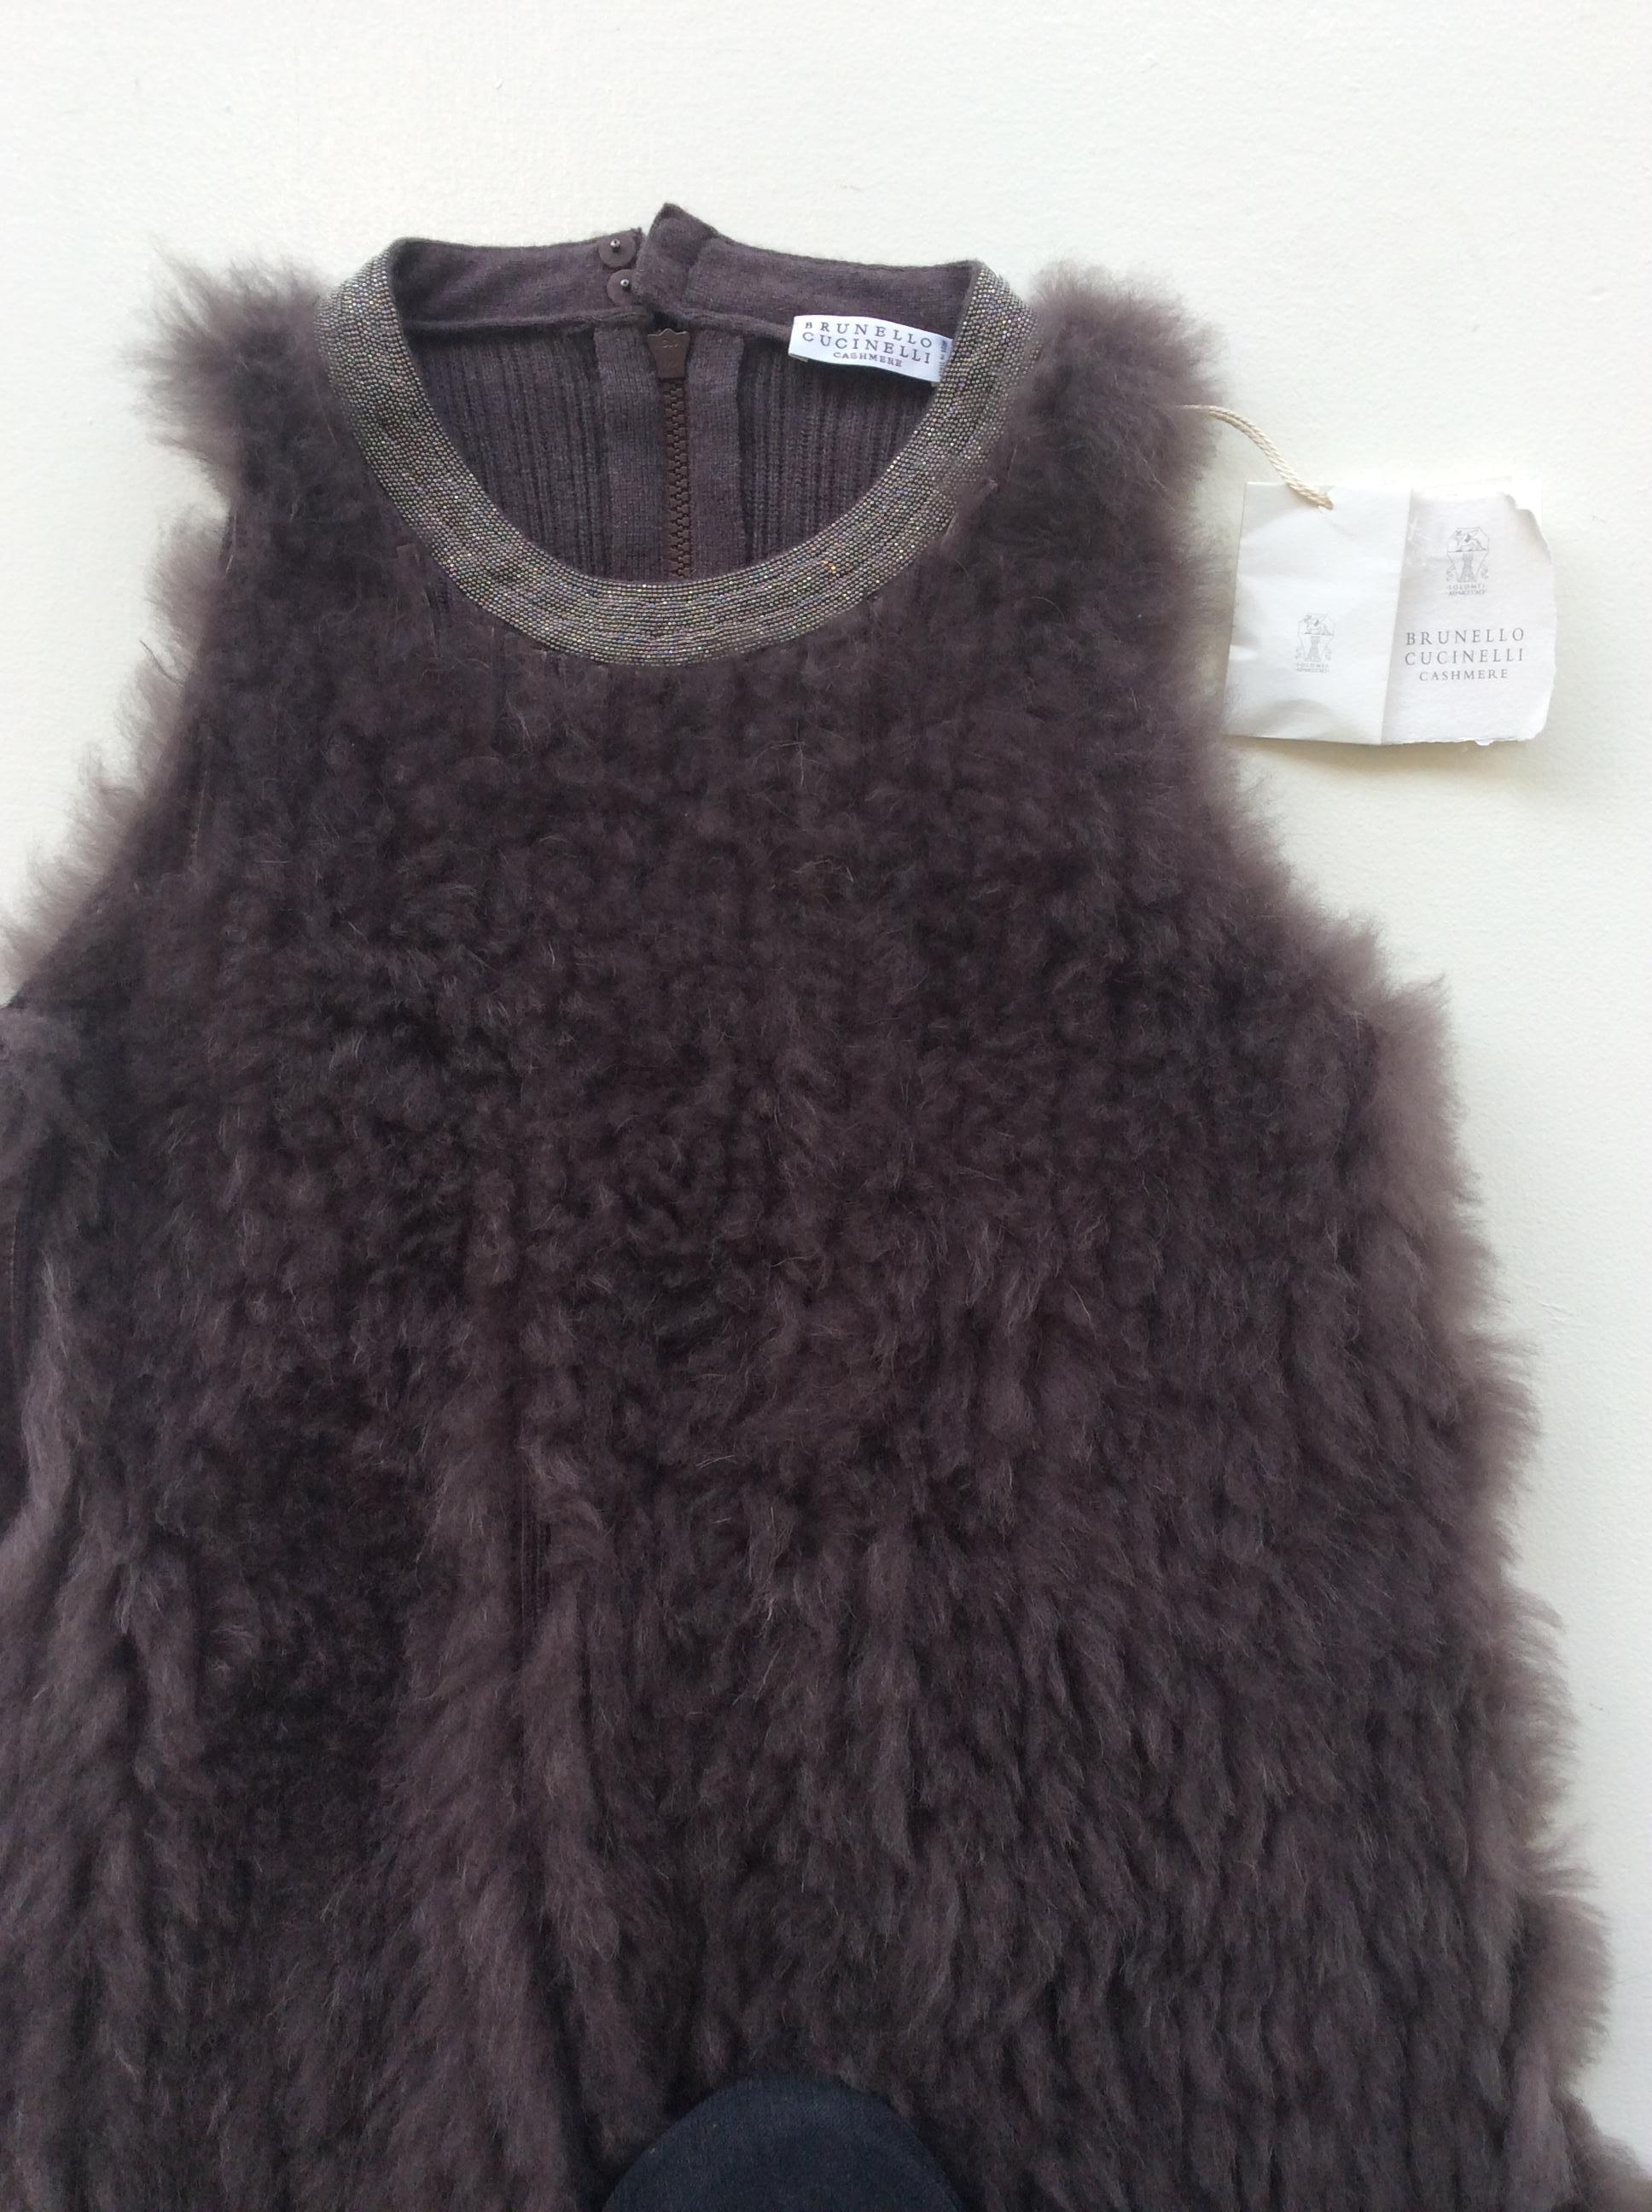 Women's Brunello Cucinelli Taupe Cashmere/Goat Fur Knit Top, Silver Monili Bead Neckline